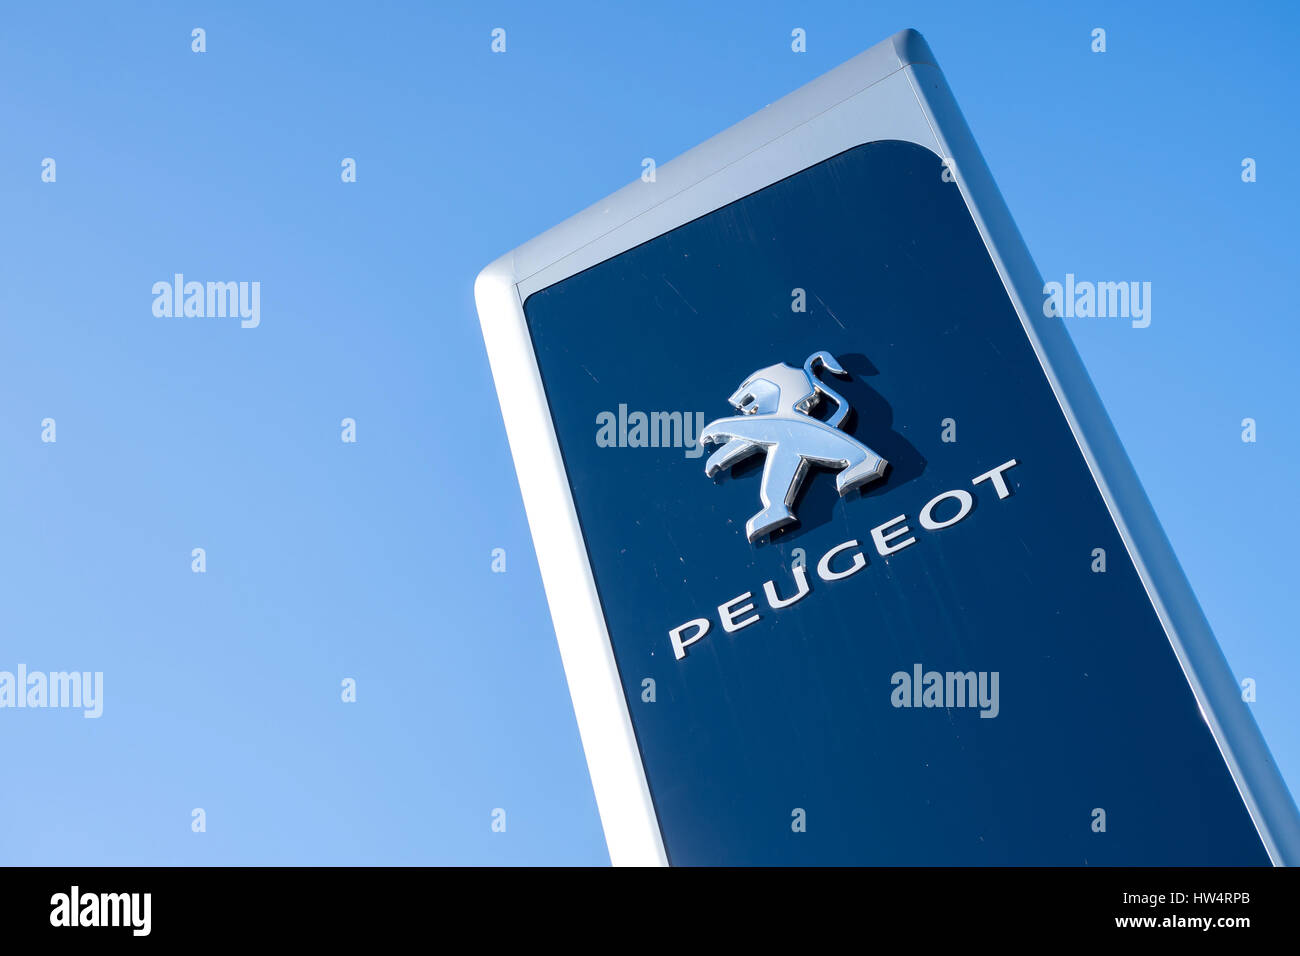 Peugeot dealership sign against blue sky Stock Photo